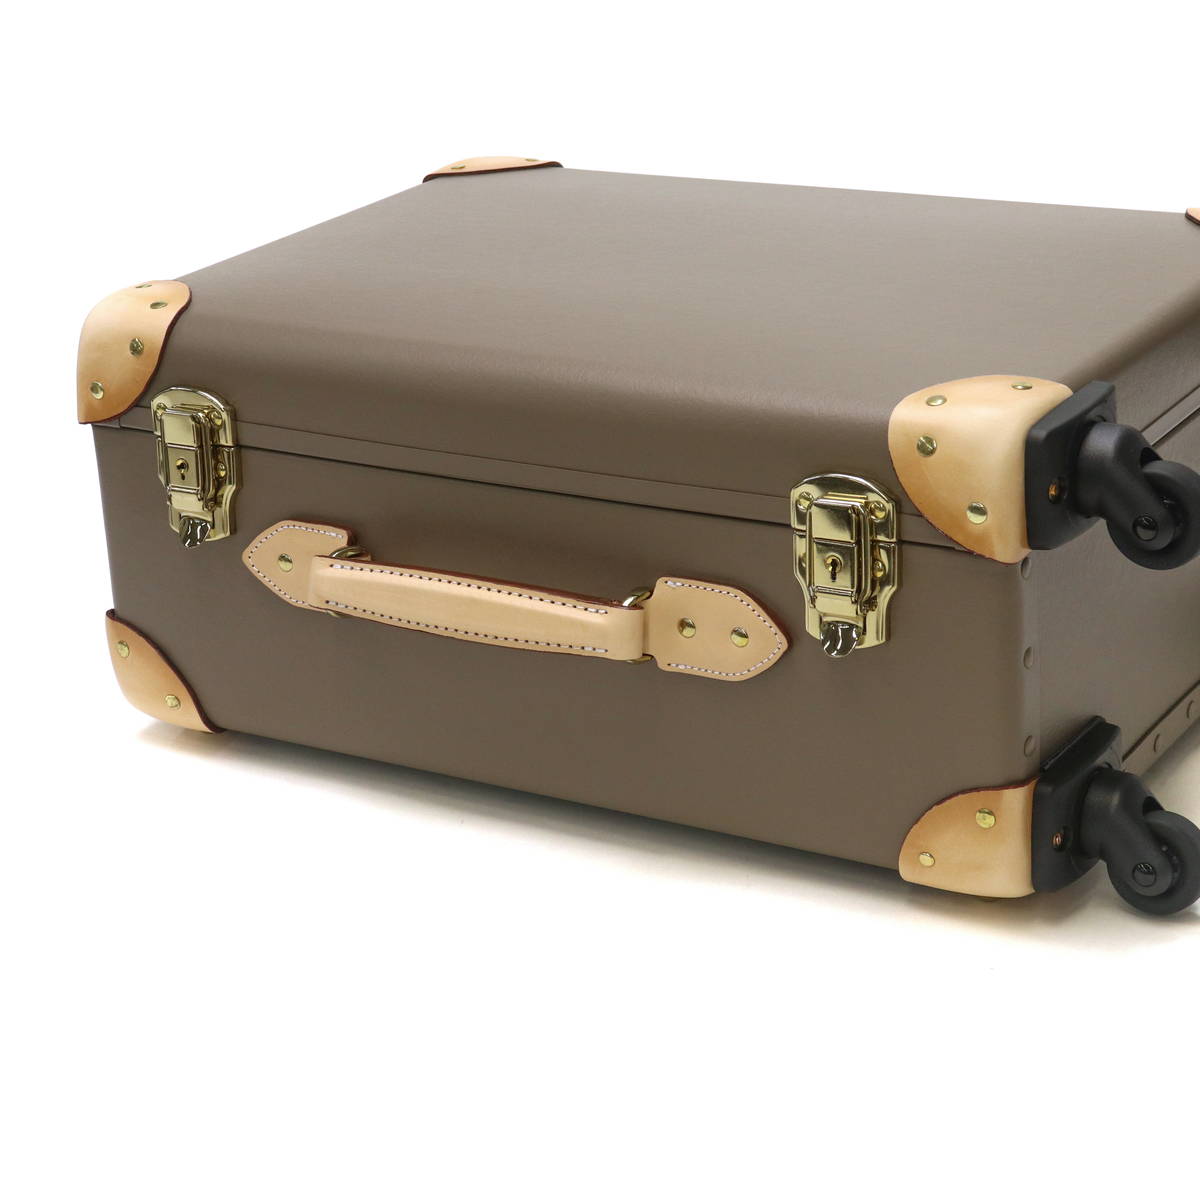 HOKUTAN ホクタン allure Travel S 機内持ち込み対応スーツケース